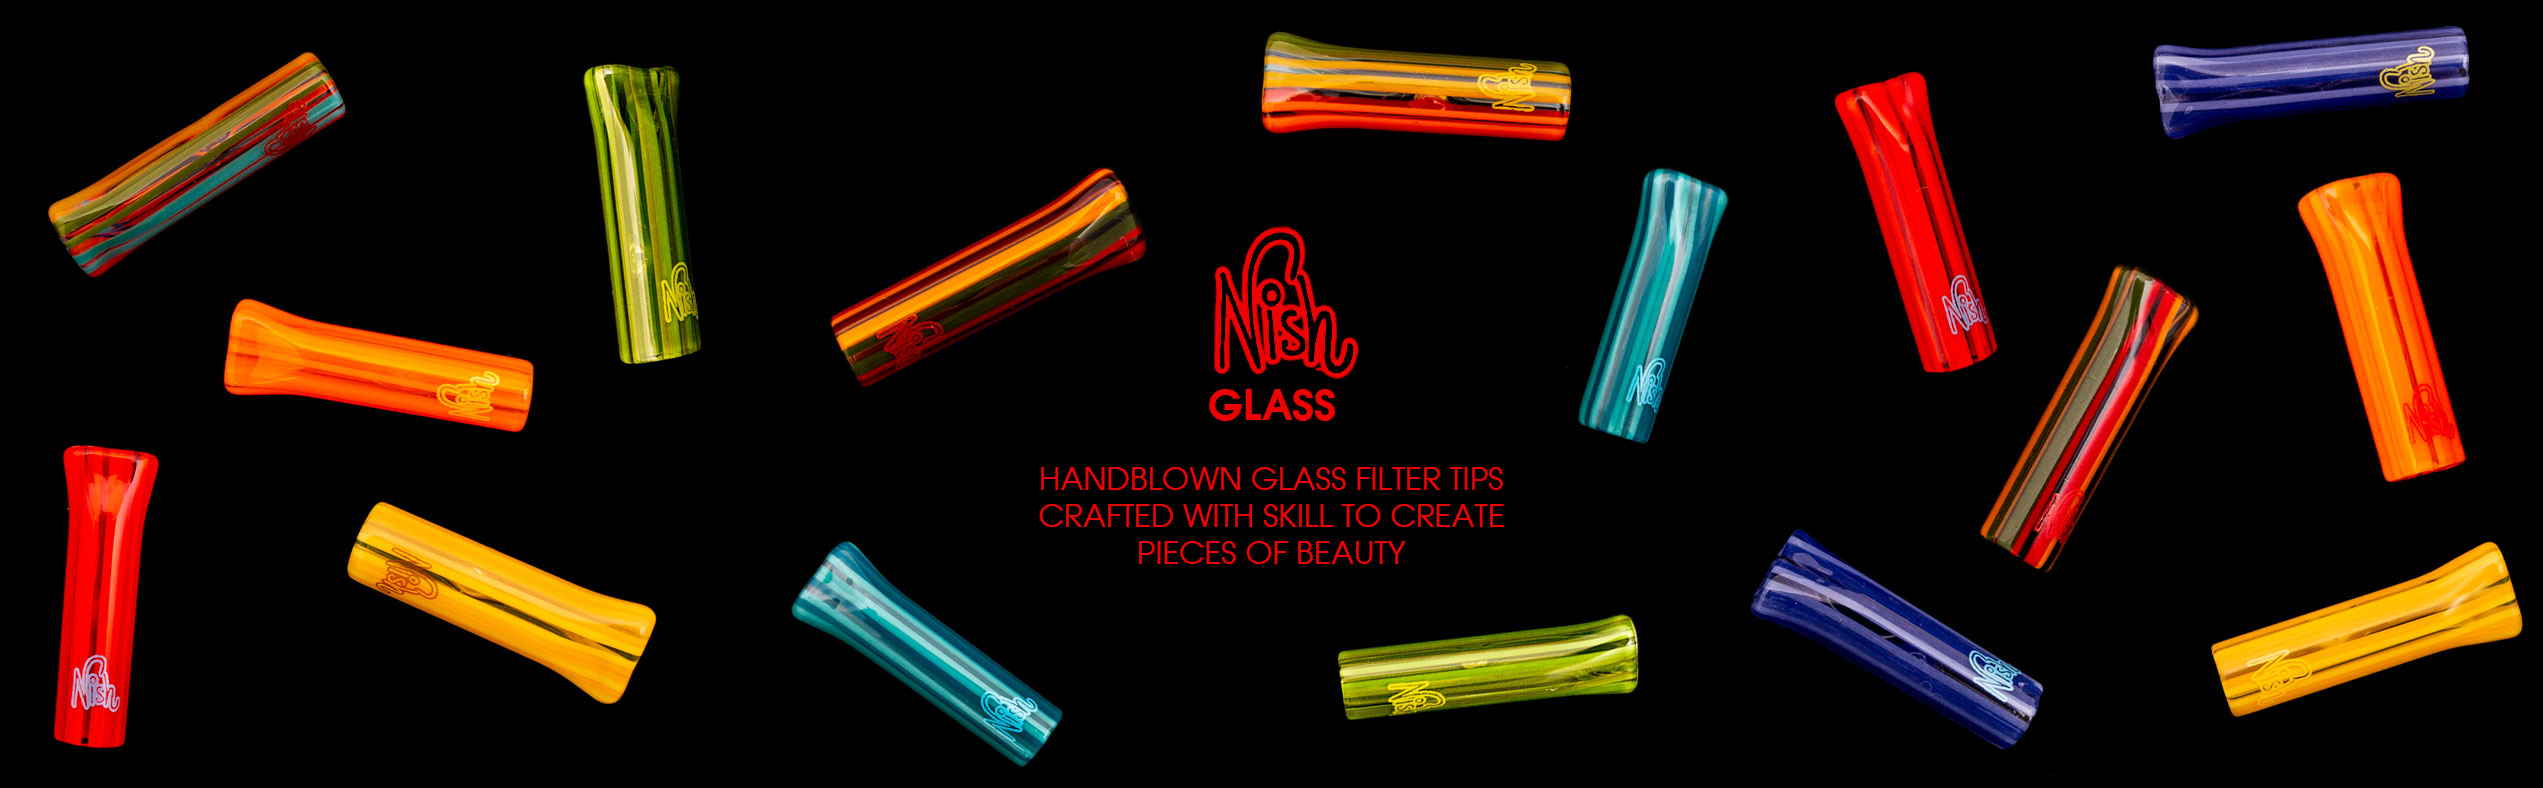 Nish Glass Filter Tips